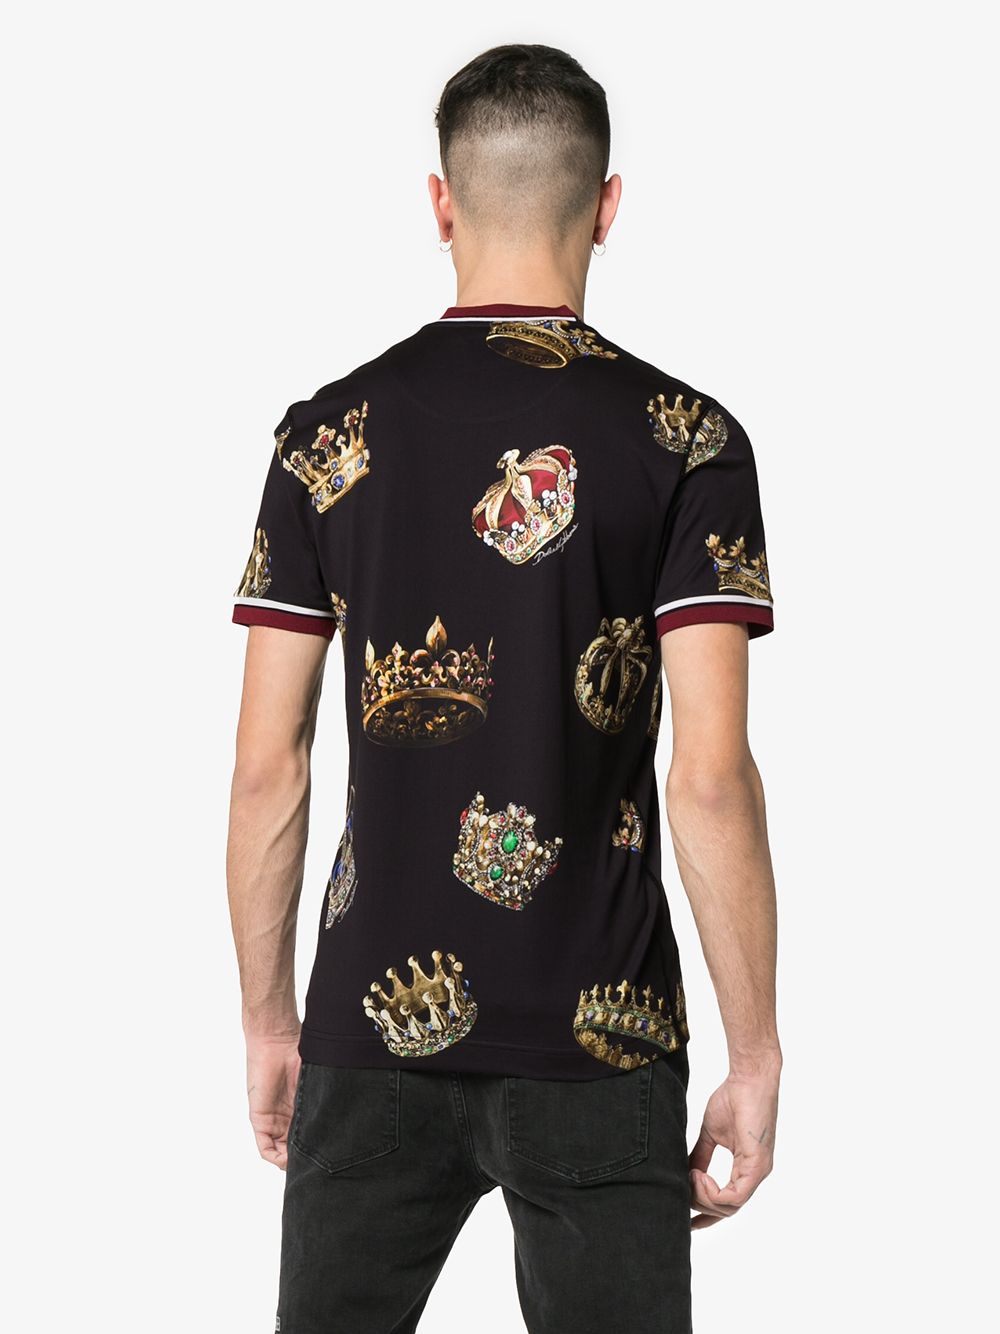 Футболка дольче габбана мужская. Dolce Gabbana футболки 2023. Майка Дольче Габбана. Футболки Луи Дольче Габбана. Dolce Gabbana Crown Shirt.